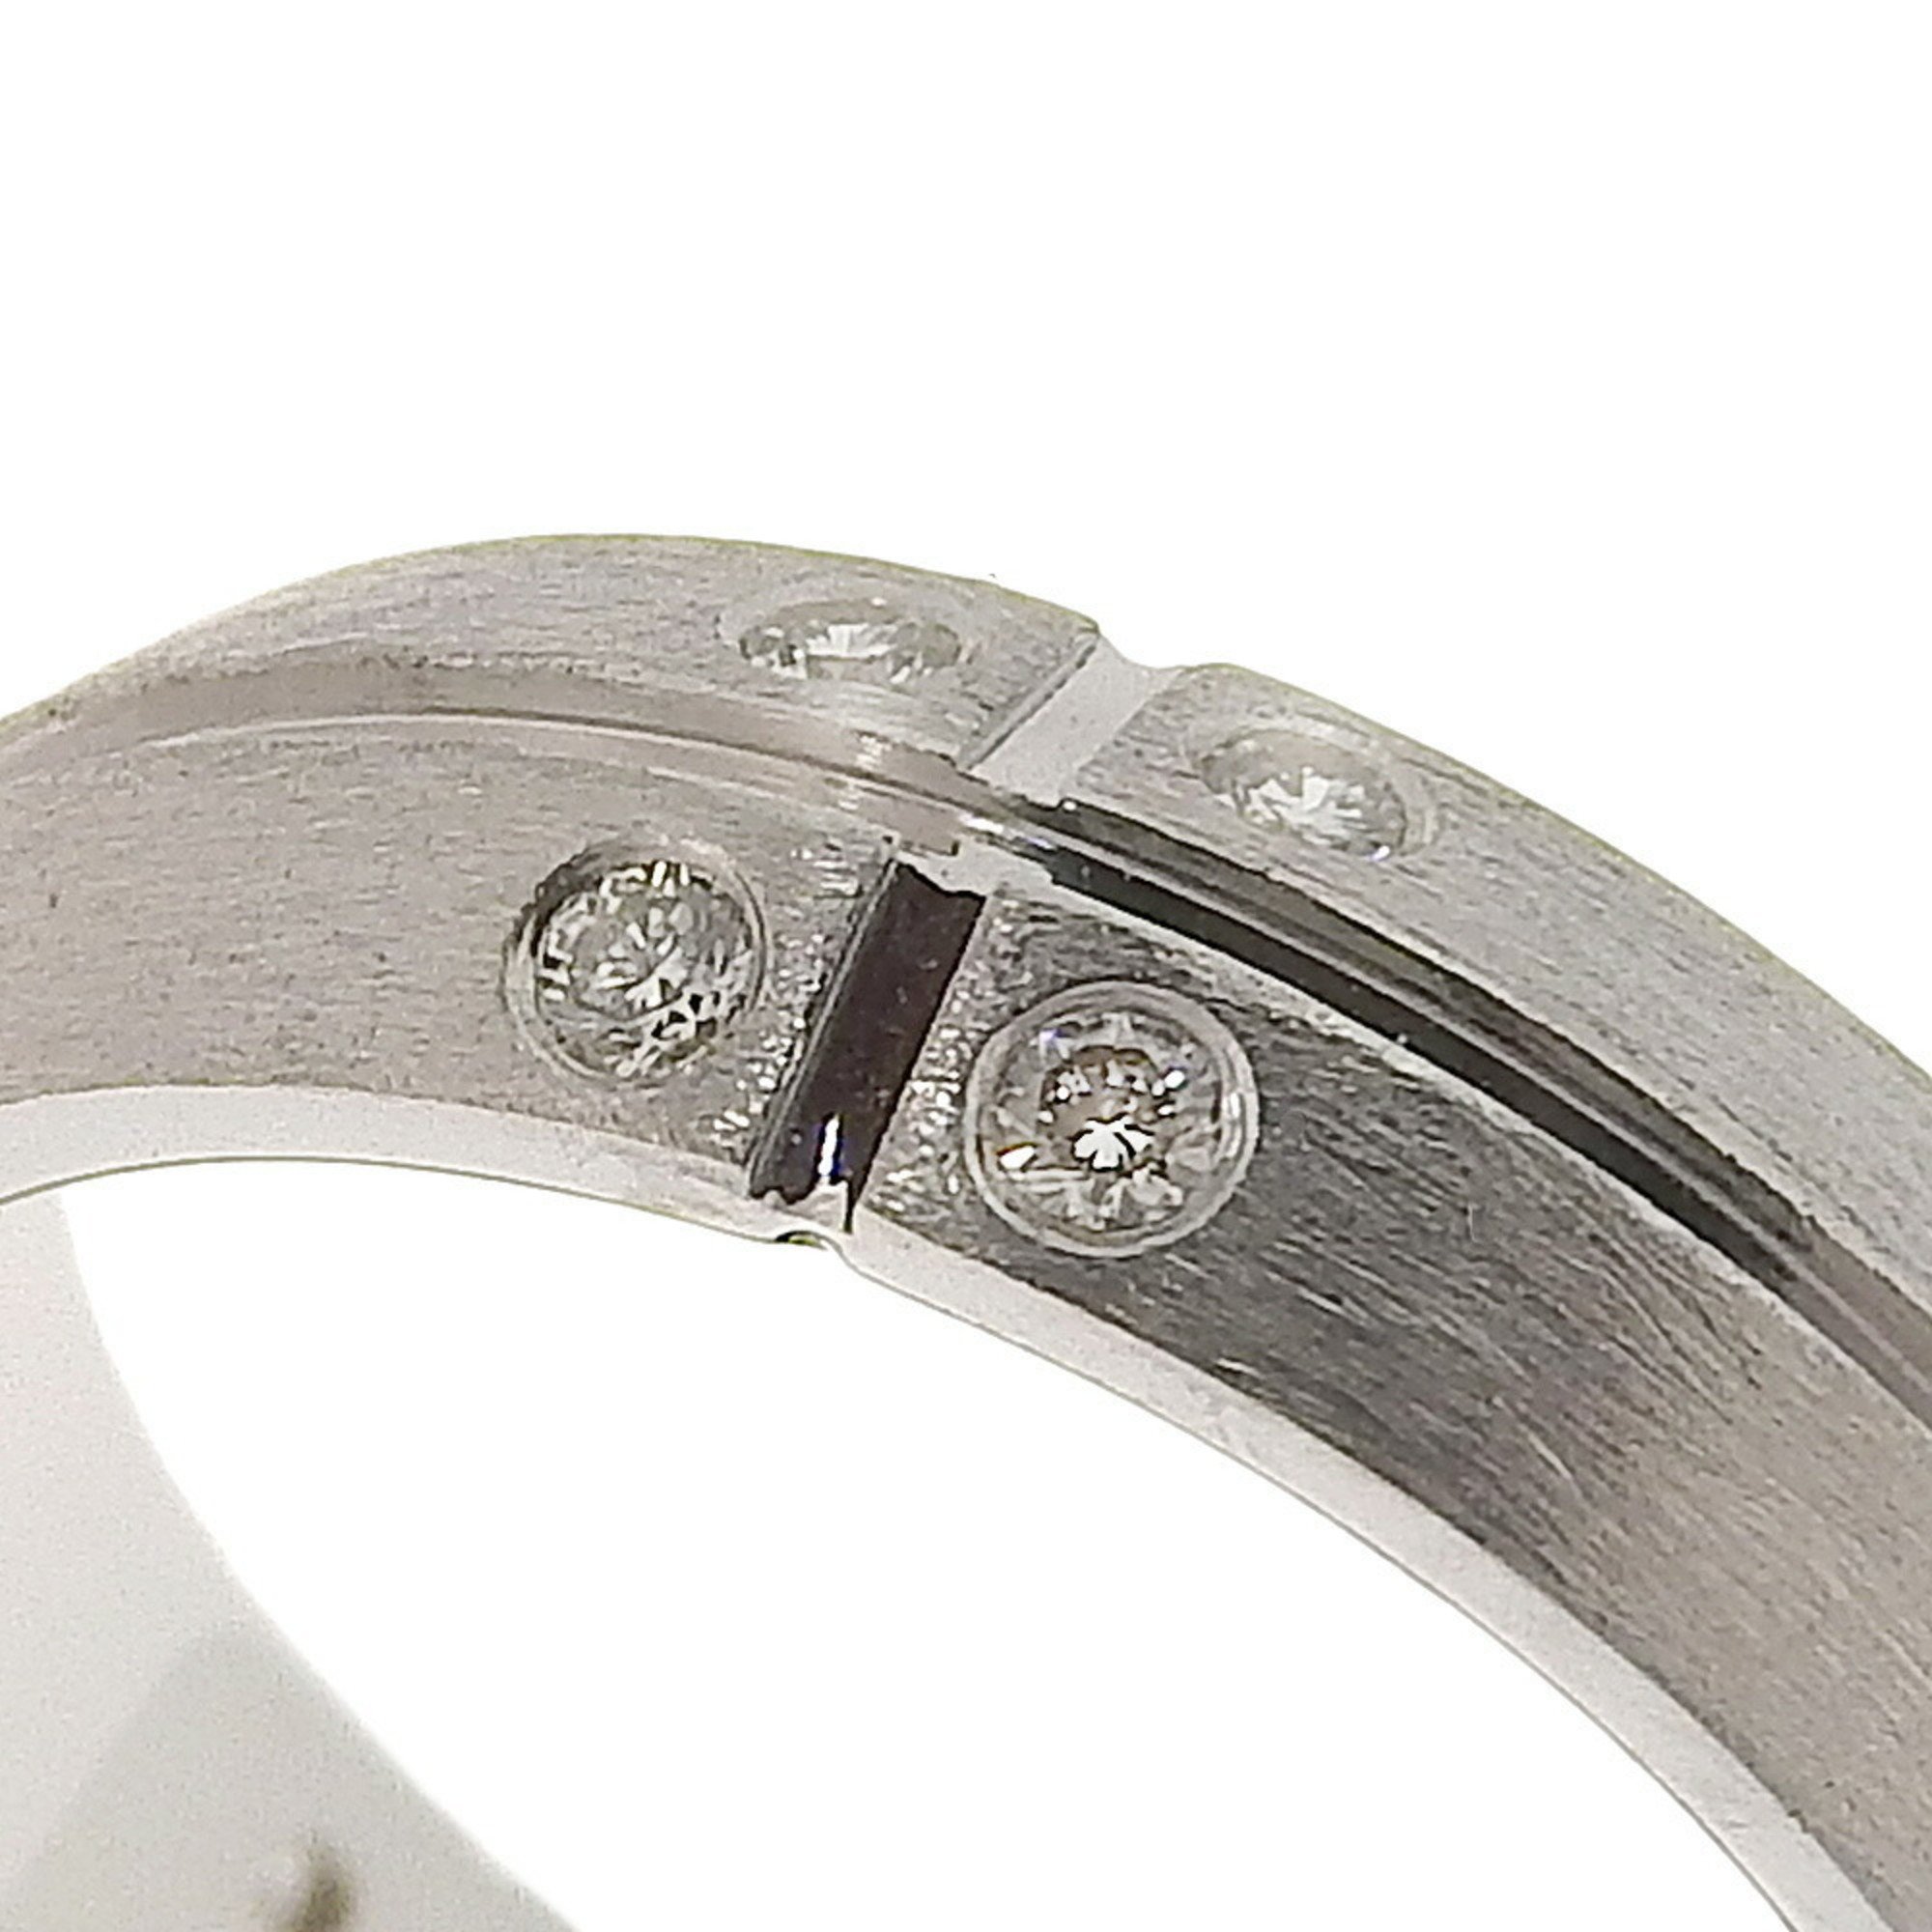 Tiffany & Co. Streamerica size 6.5 ring, K18 white gold and diamond, 2000, approx. 5.2g, Streamerica, women's